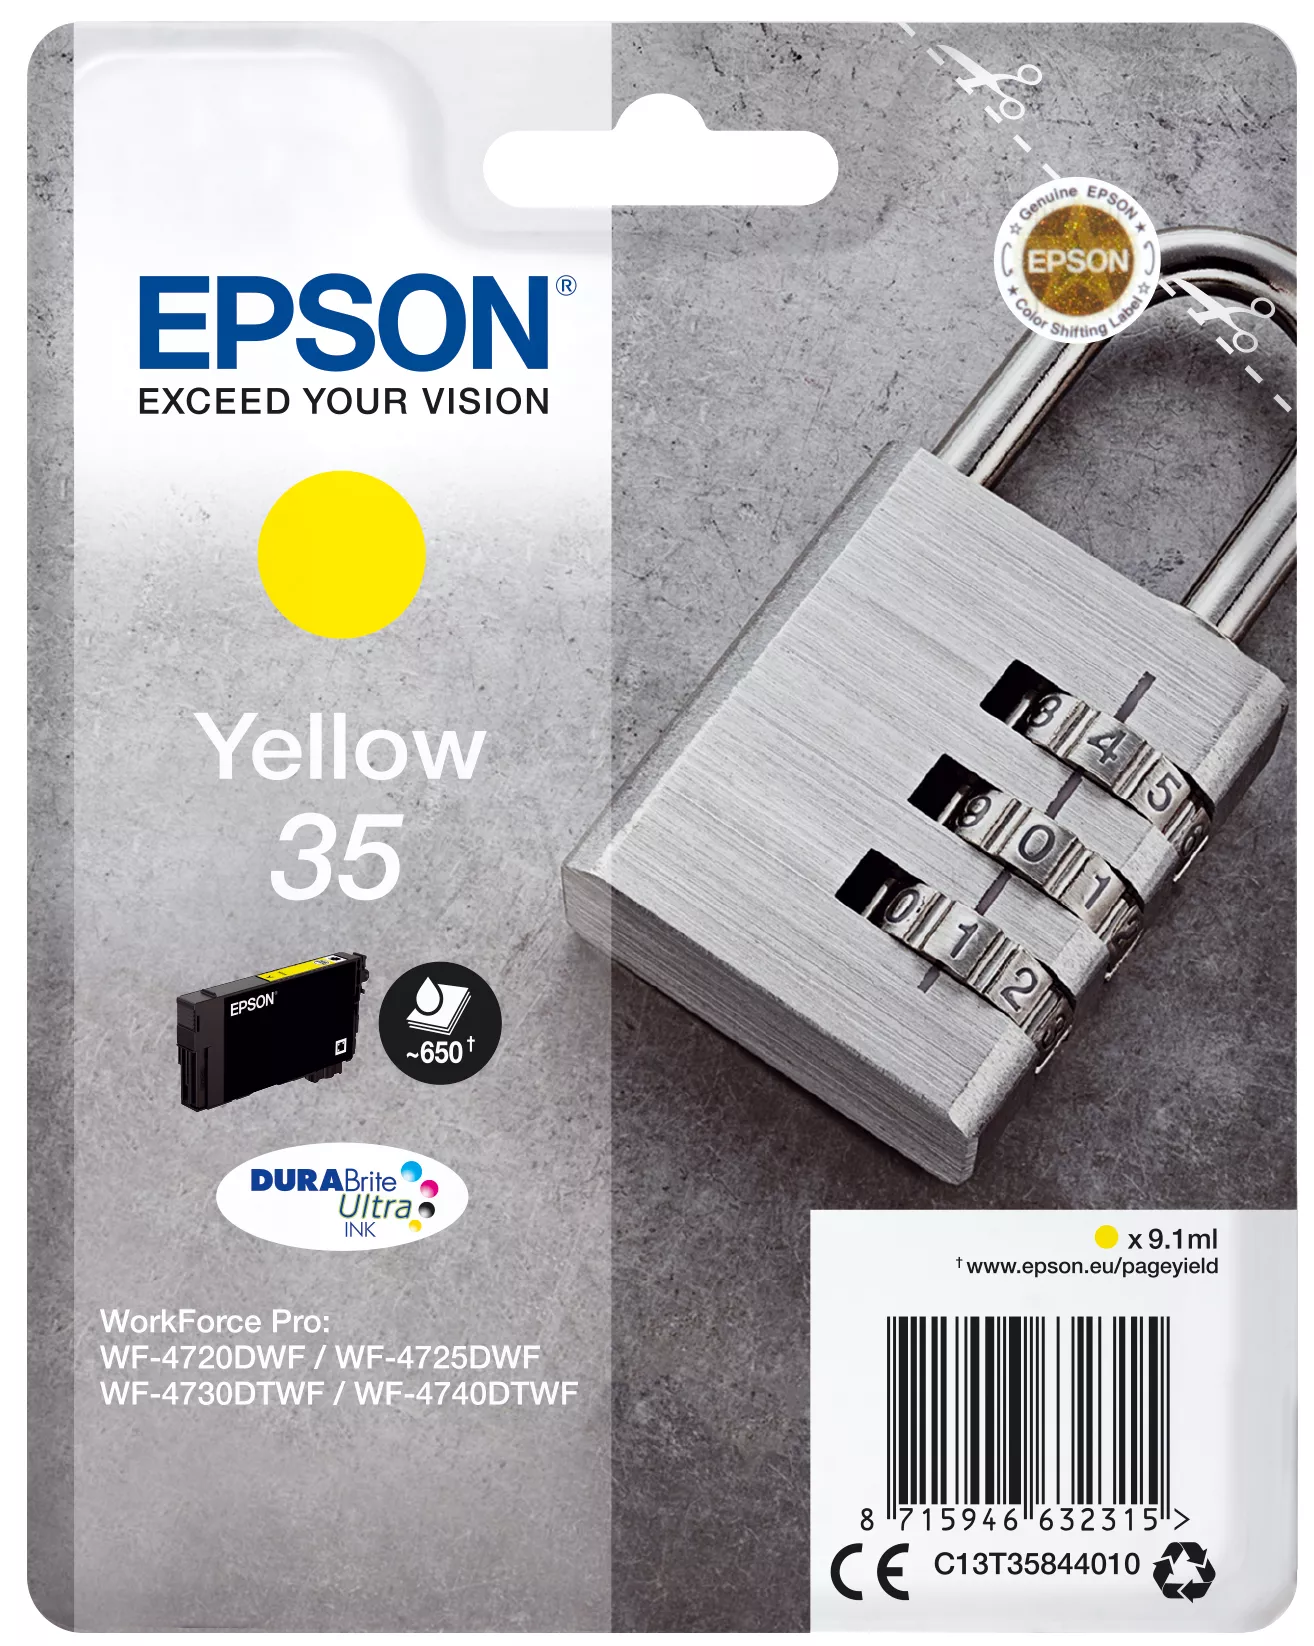 Achat EPSON 35 Ink Yellow 9.1ml Blister au meilleur prix